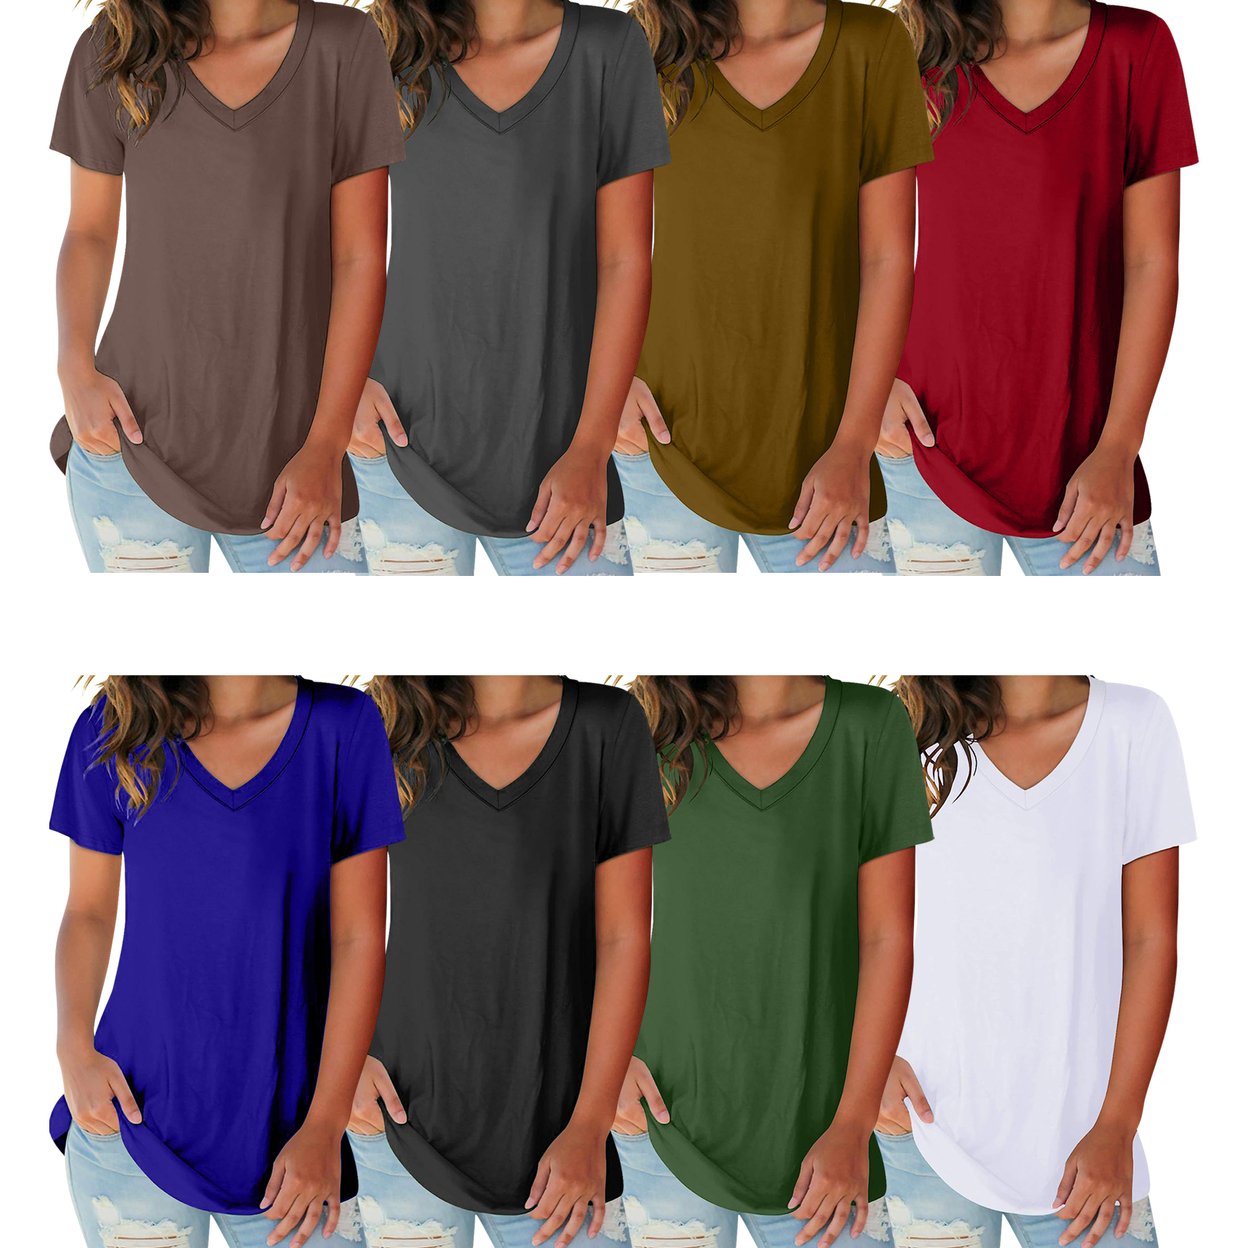 3-Pack: Women's Ultra Soft Smooth Cotton Blend Basic V-Neck Short Sleeve Shirts - Black, Navy Mustard, Large